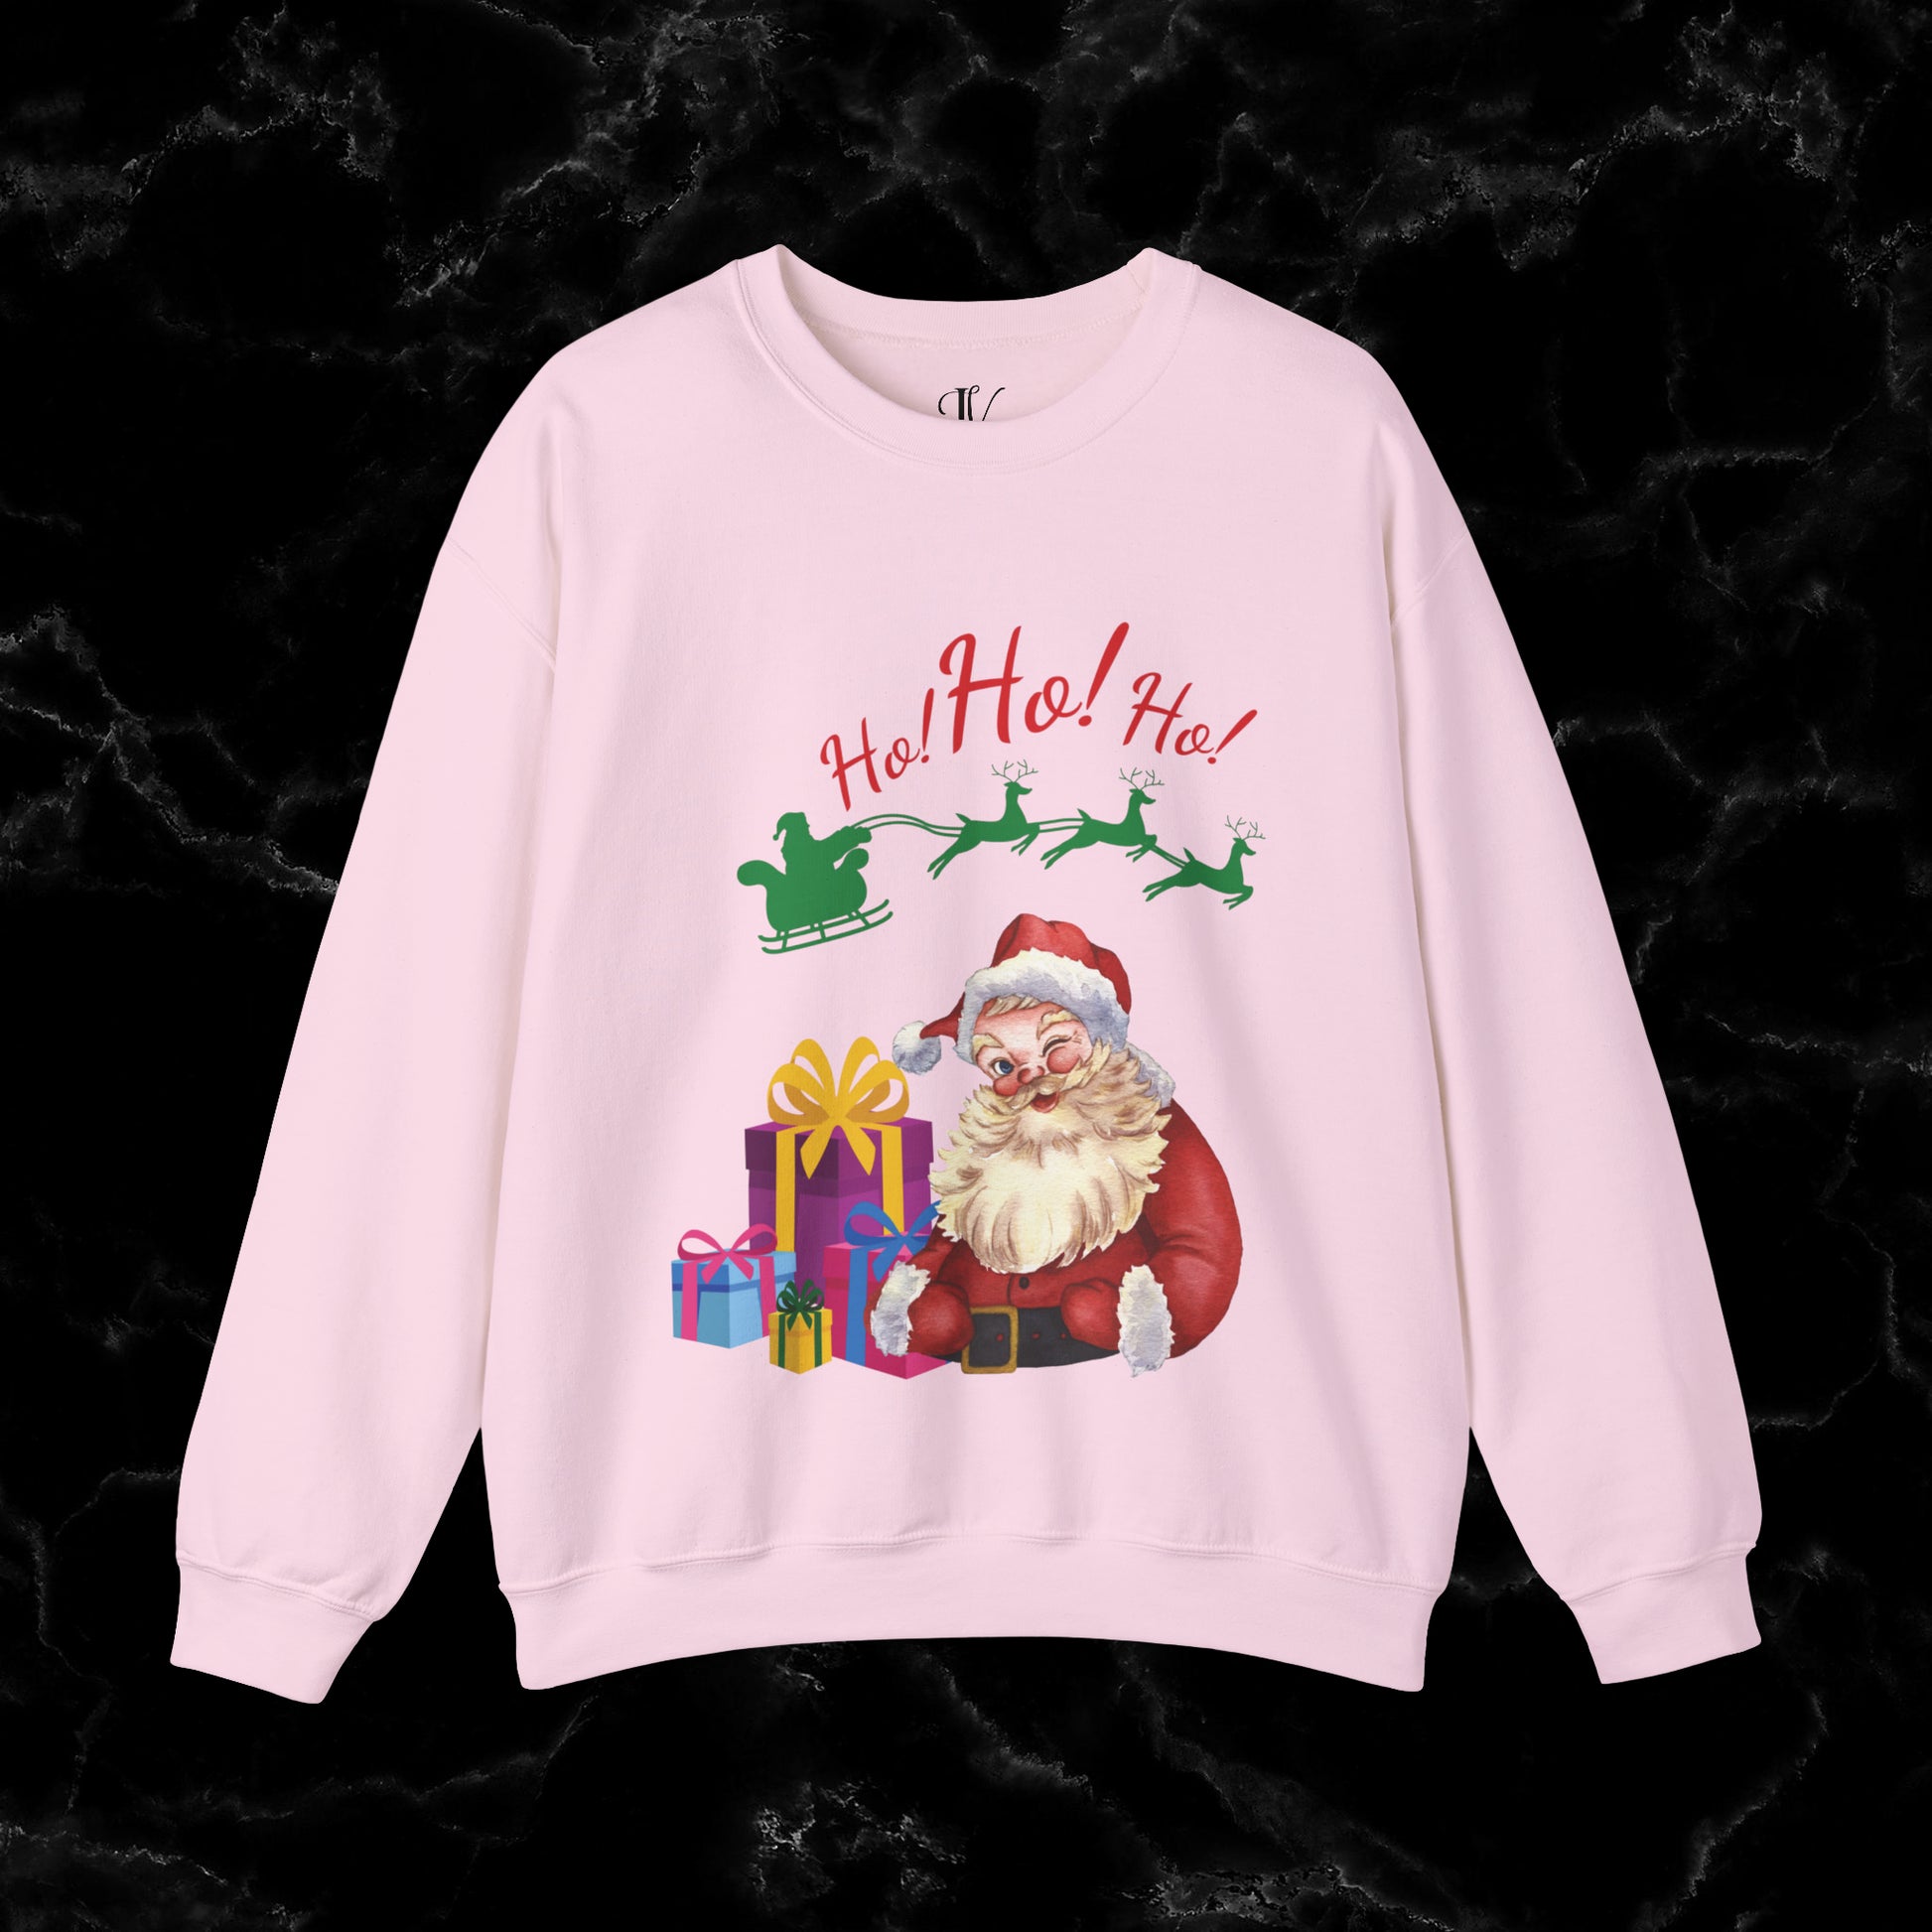 Retro Santa Sweatshirt - Vintage Christmas Fashion for Holiday Cheer Sweatshirt S Light Pink 